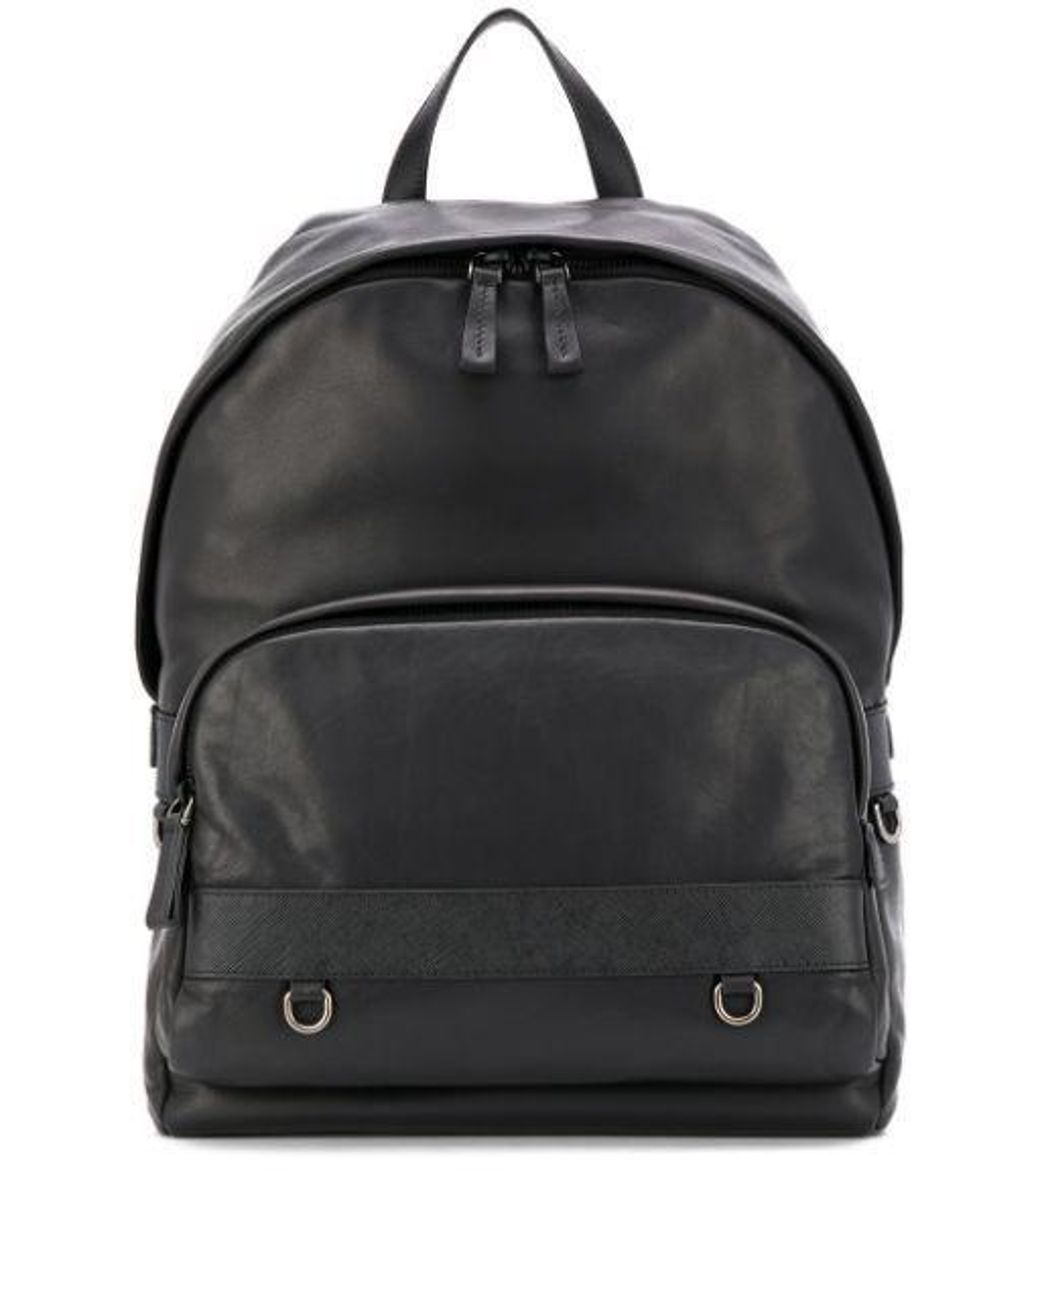 Prada Backpack in Black for Men - Lyst